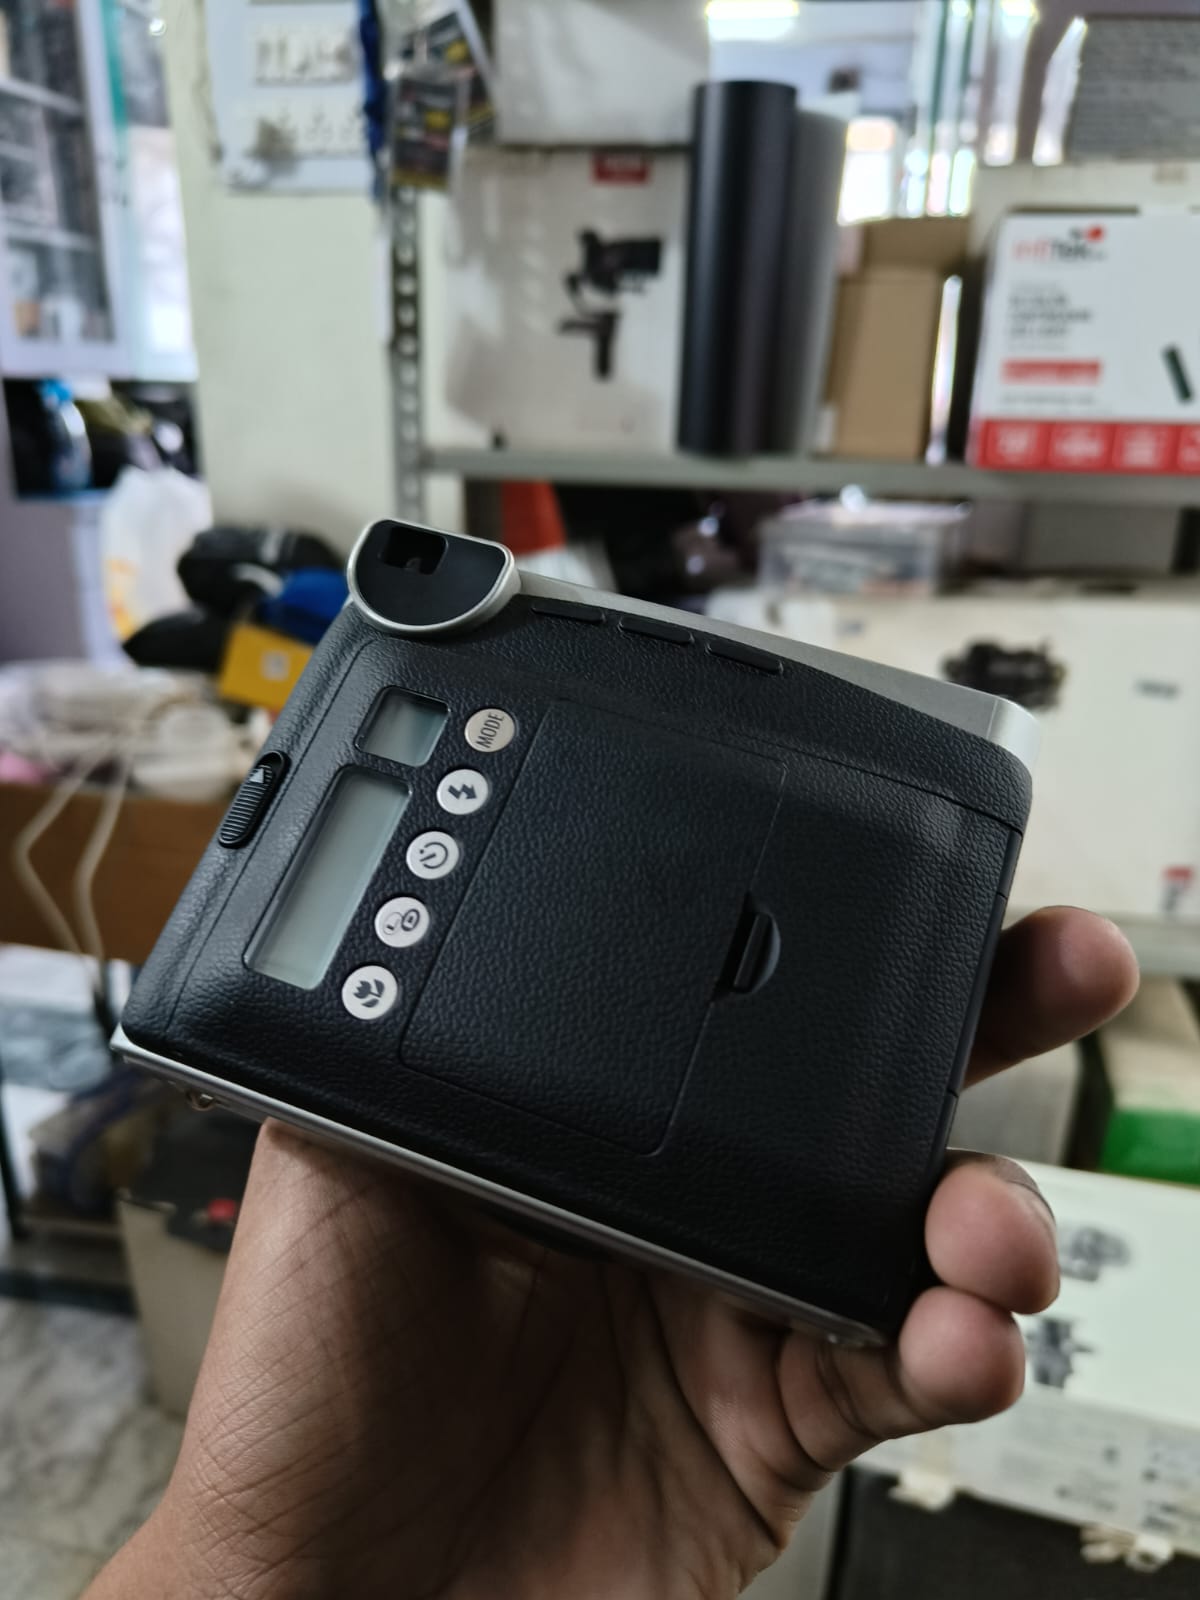 Open Box, Unused Fujifilm Instax Mini 90 Neo Classic Instant Film Camera Grey